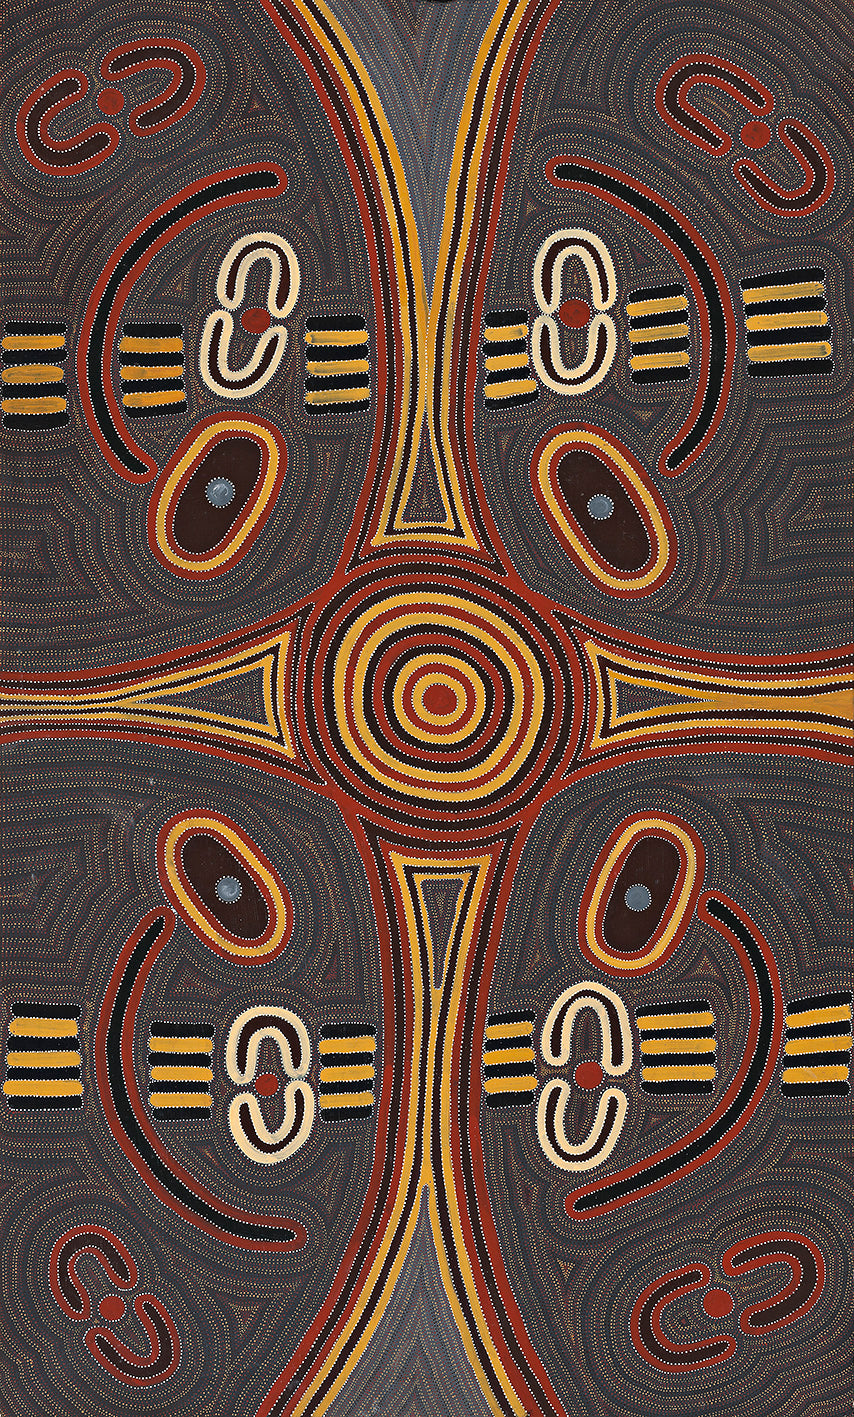 Australian Aboriginal Art Painting by Louie Pwerle of Utopia in 1994.